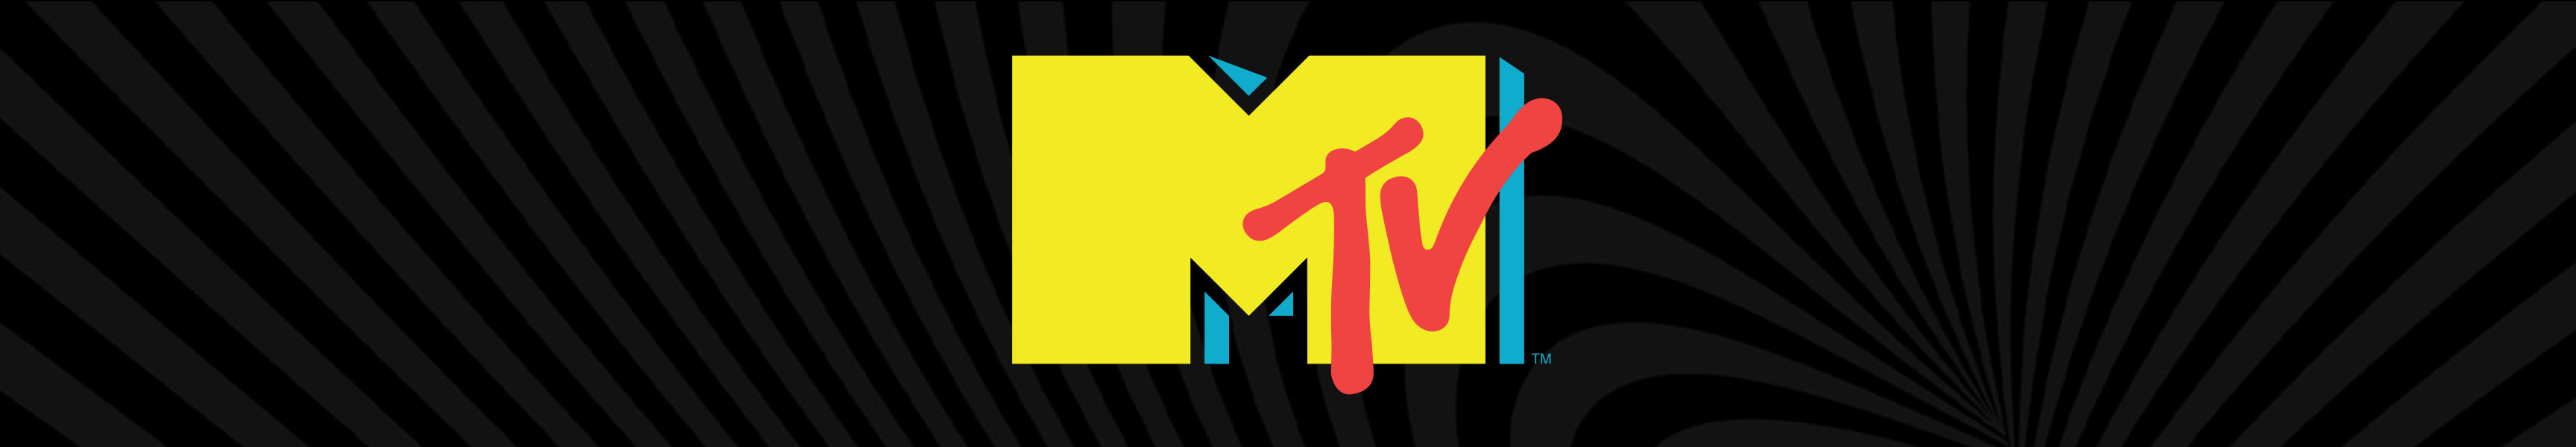 MTV Meistverkaufte Produkte